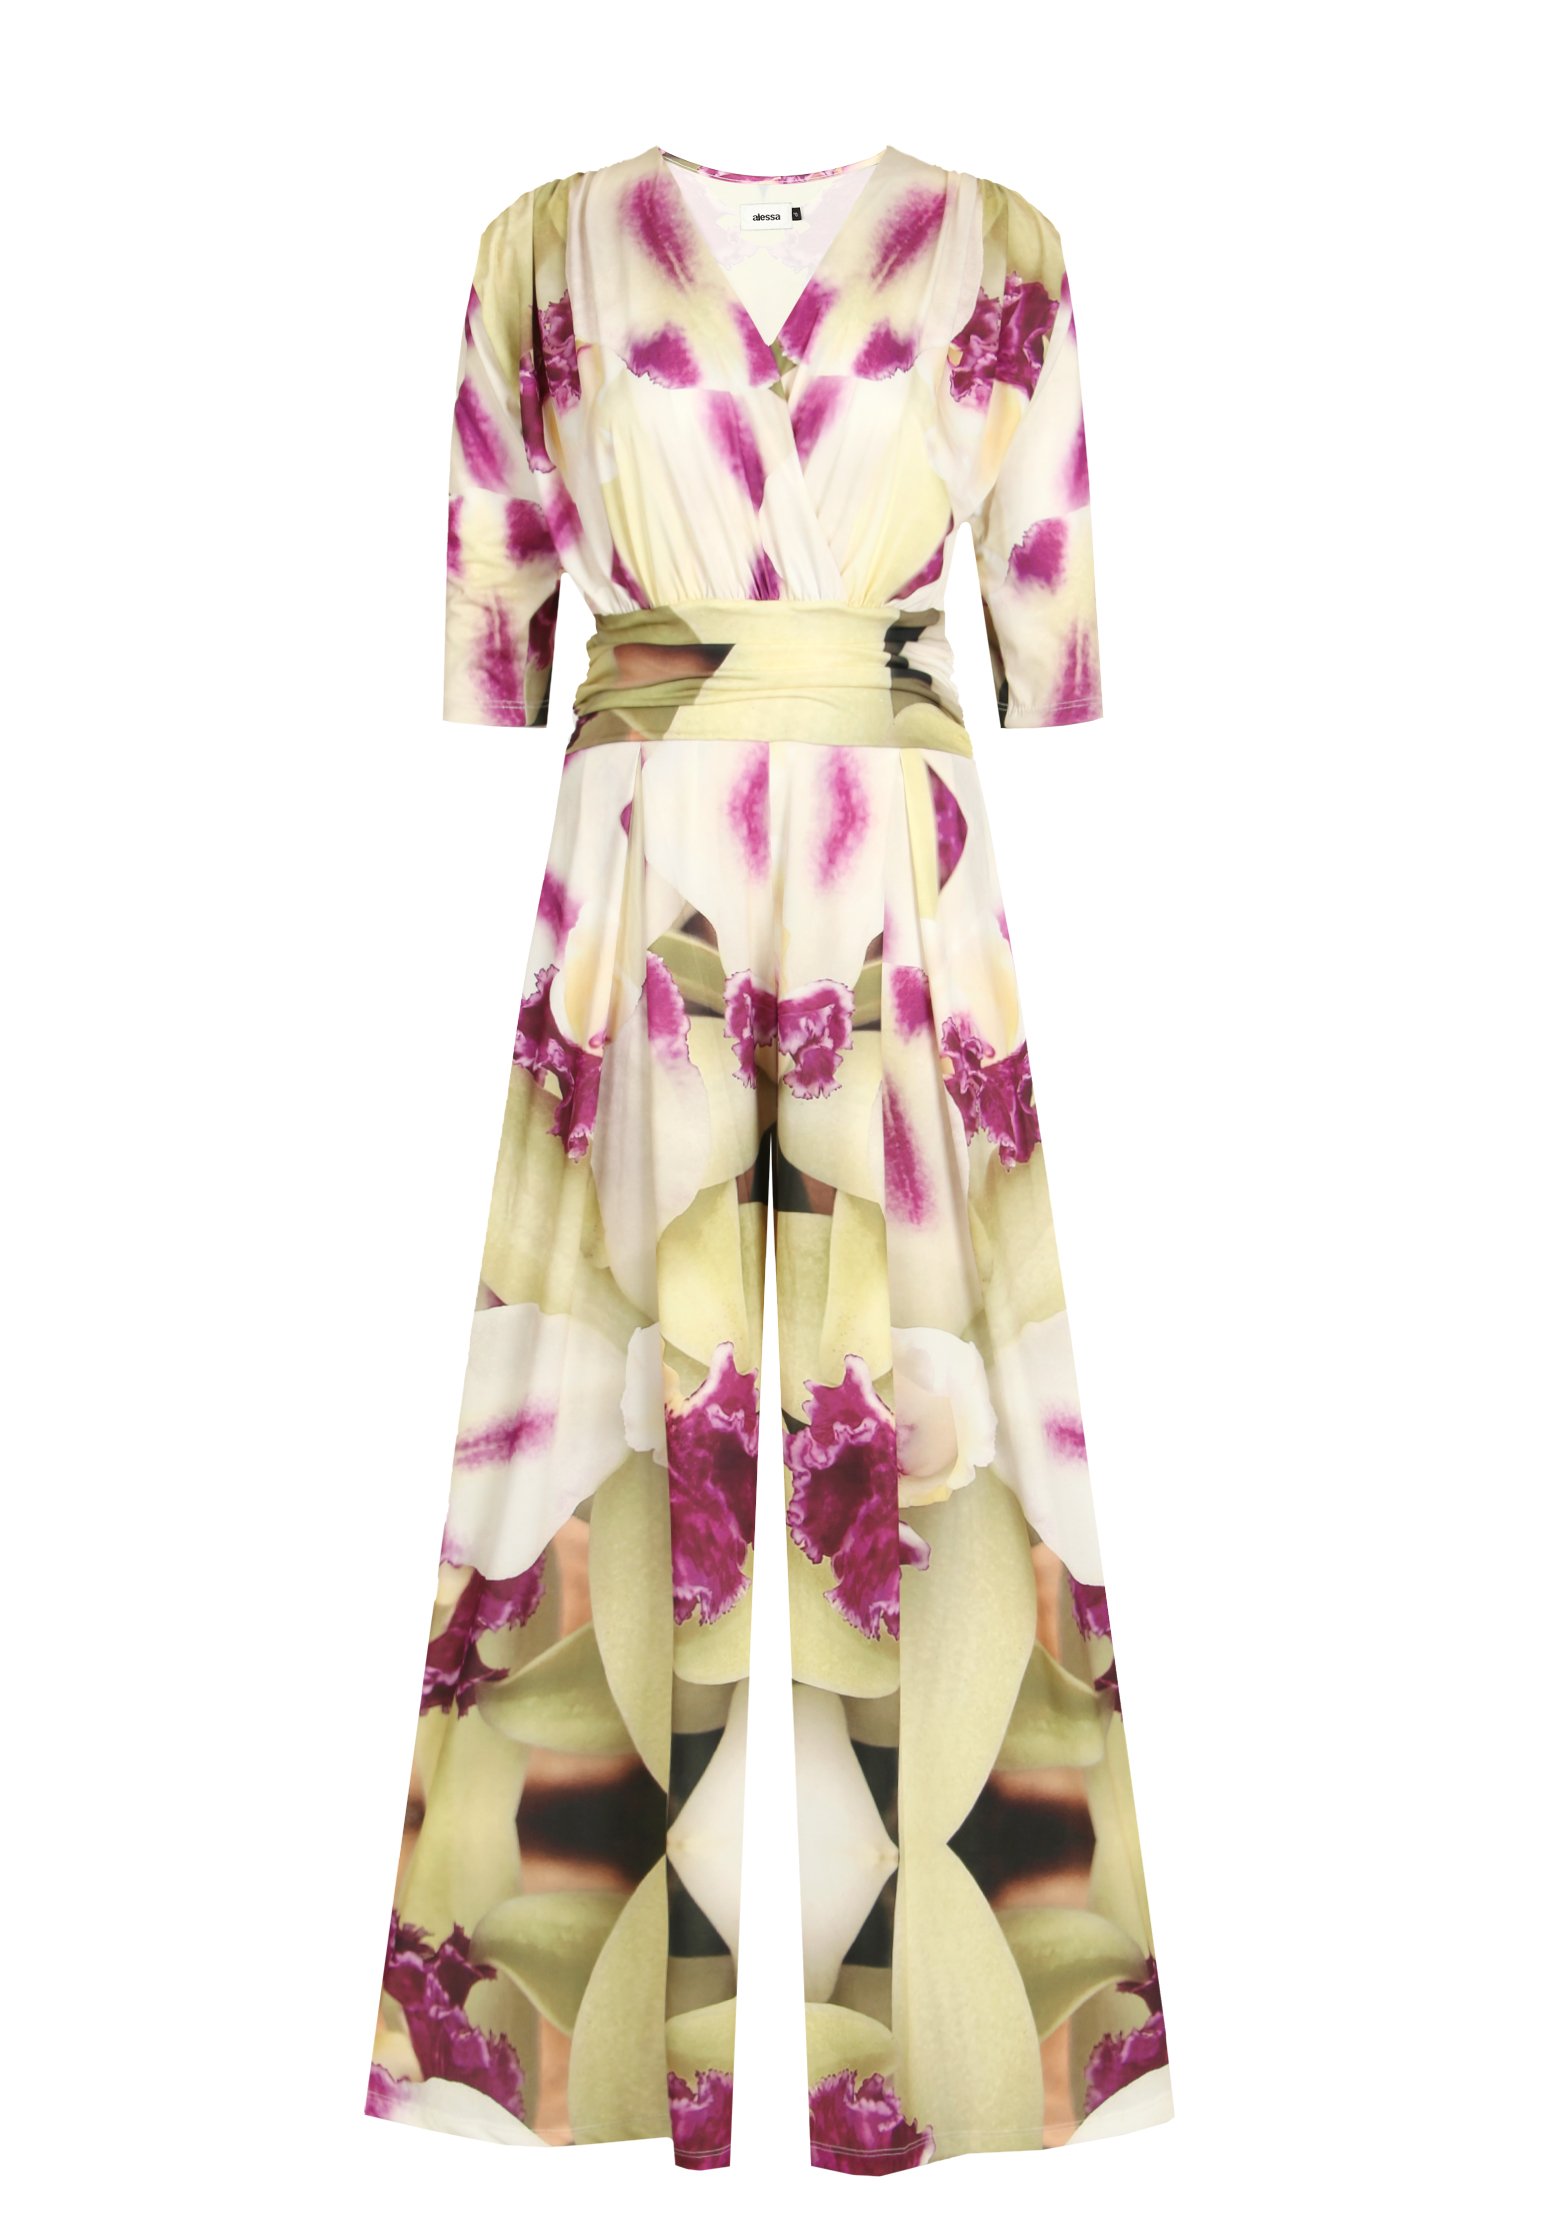 Dress ALESSA Color: white (Code: 3270) in online store Allure